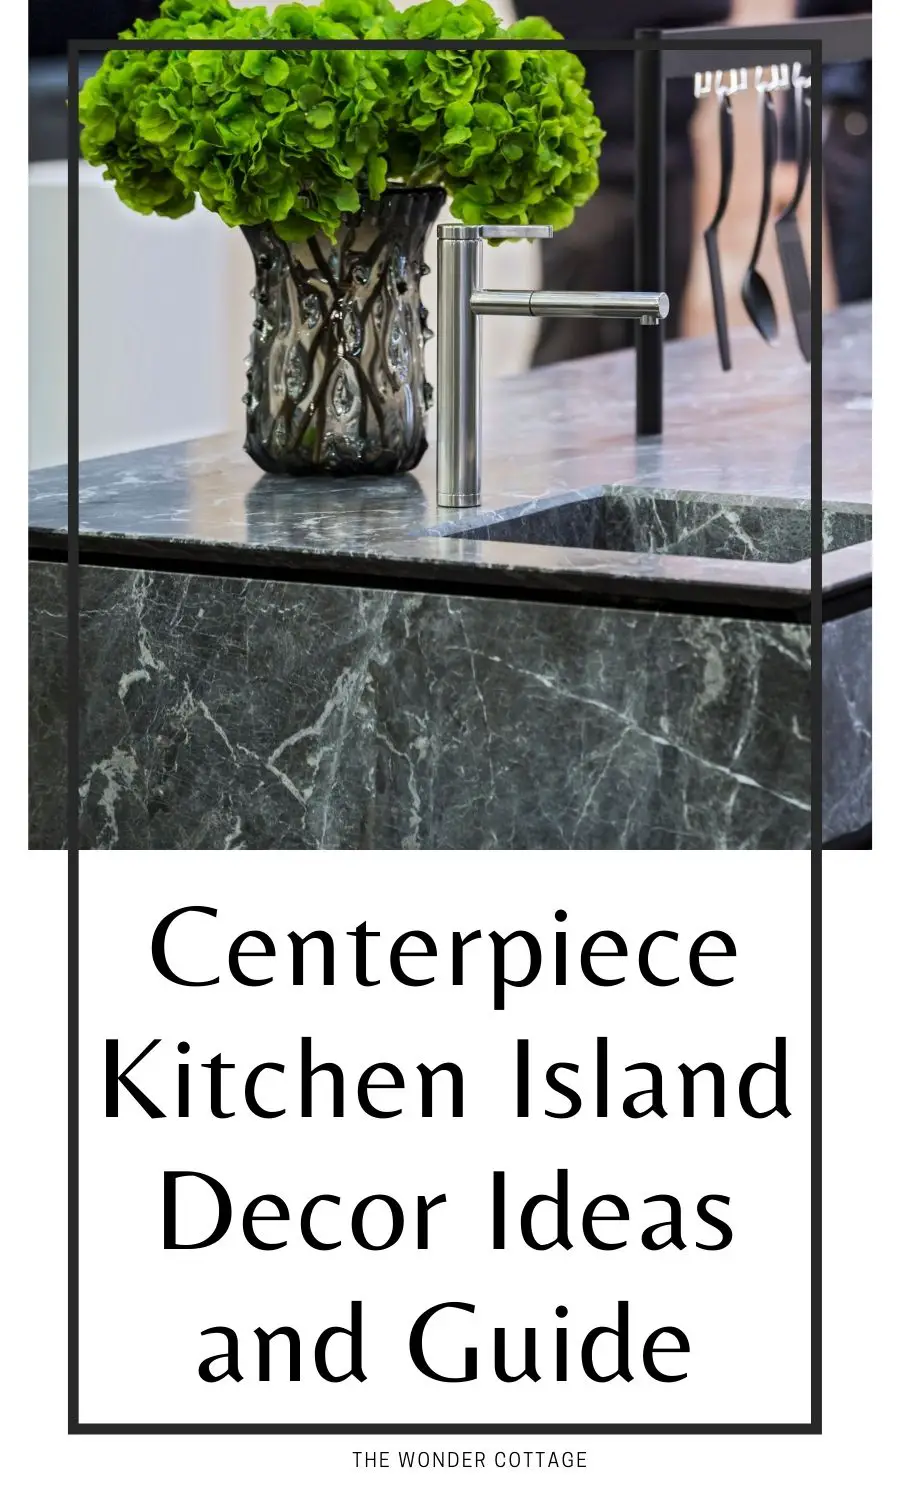 Centerpiece Kitchen Island Decor Ideas and Guide